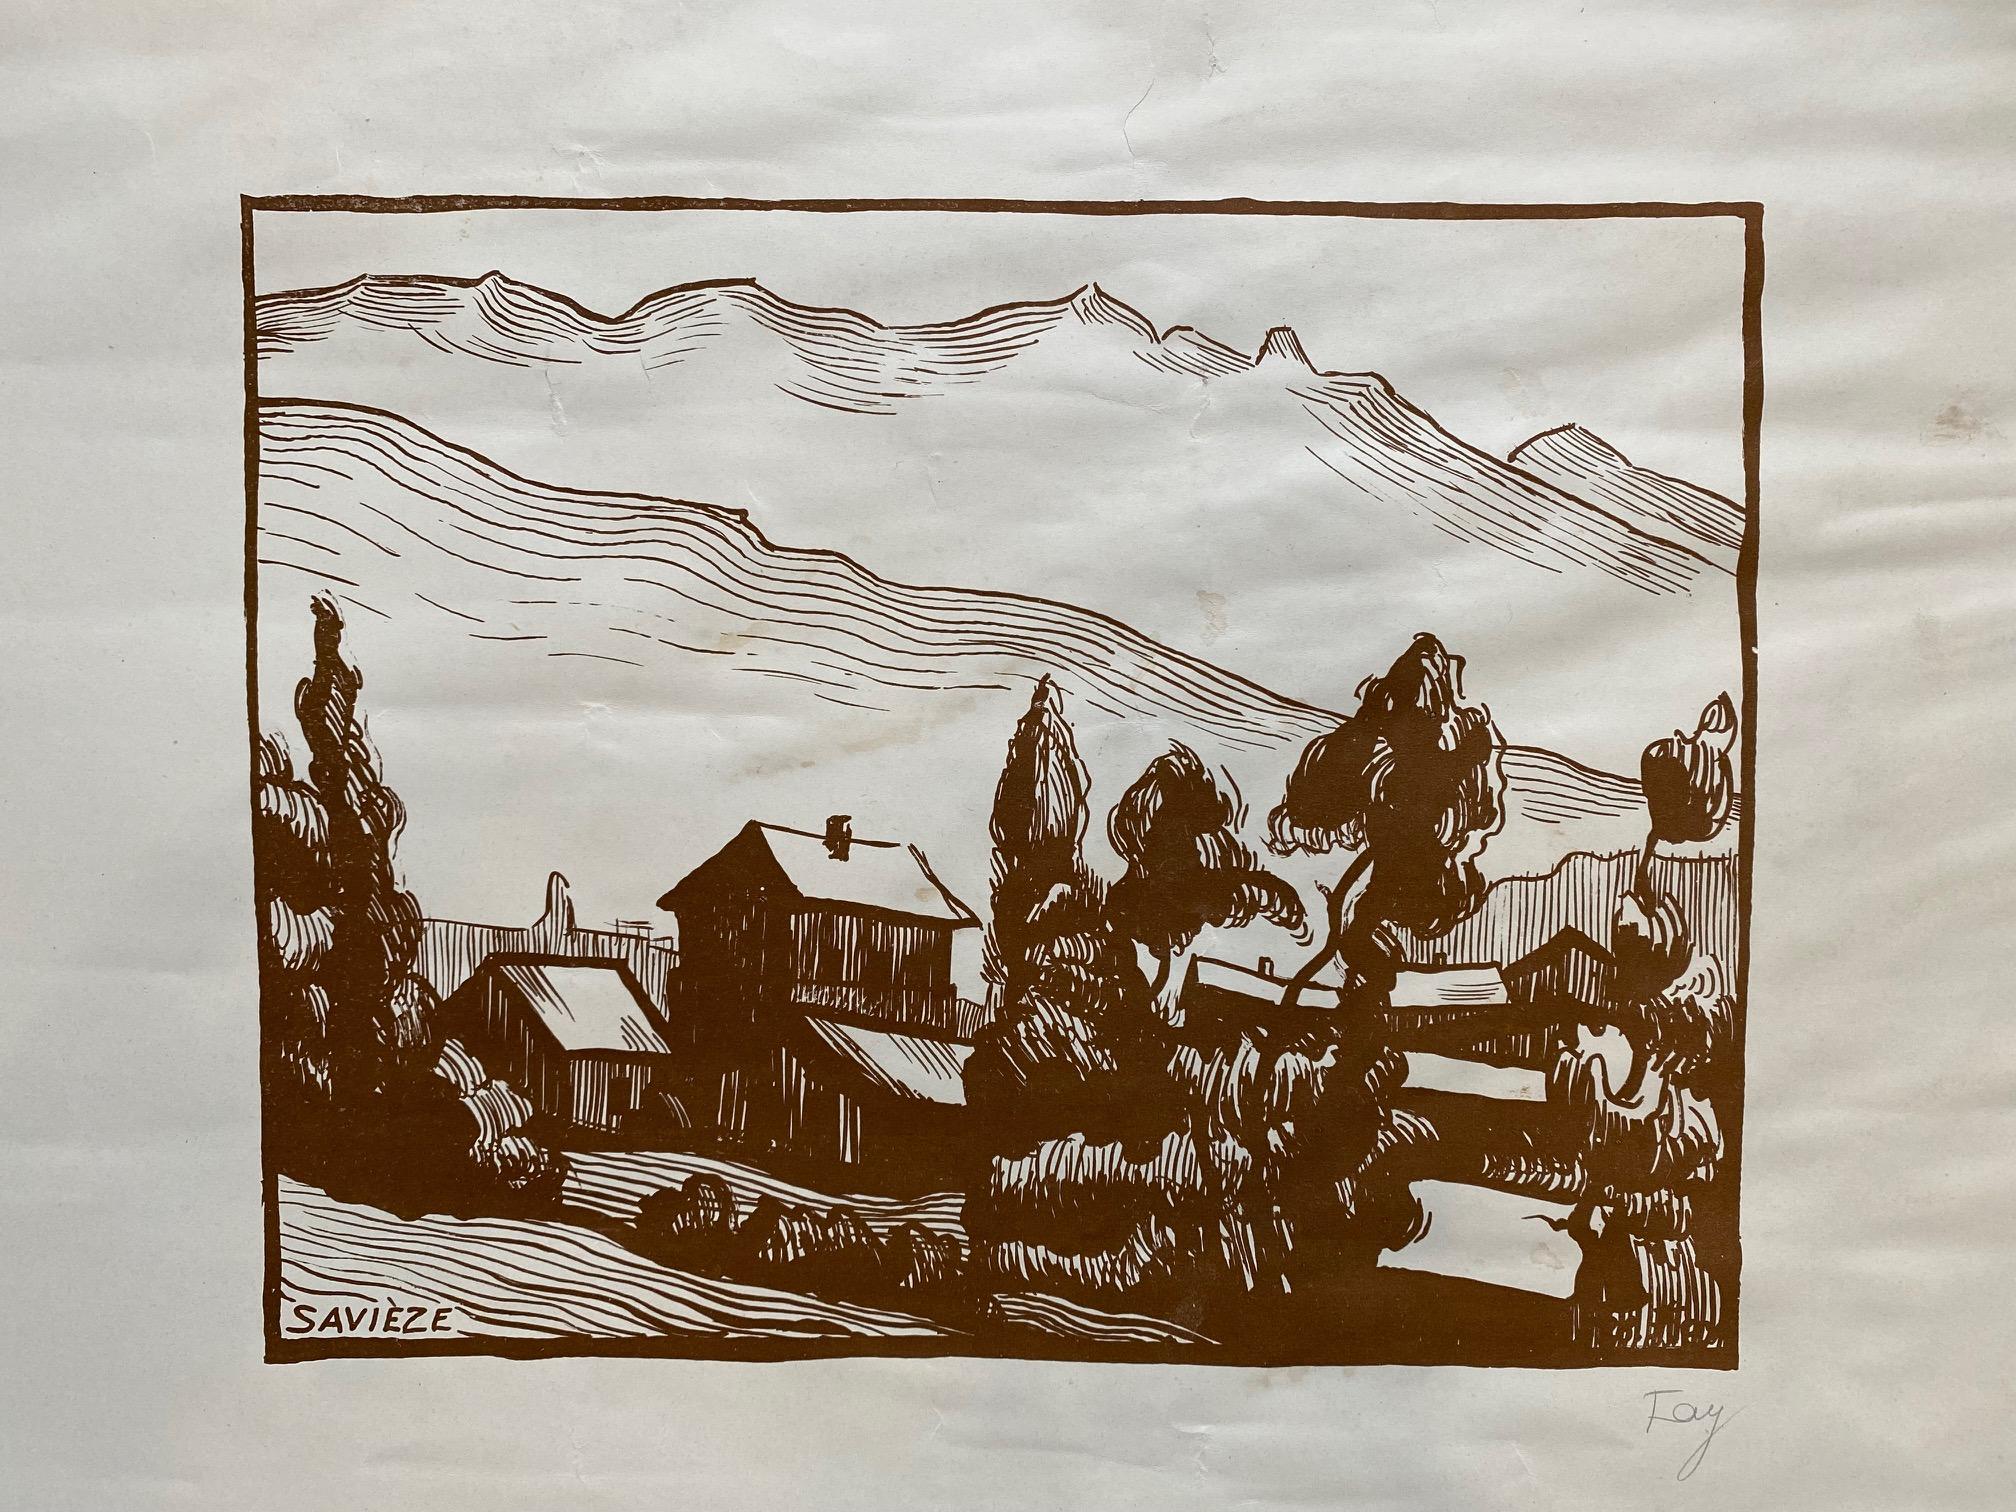 Savièze by Fred Fay - Engraving 33x42 cm